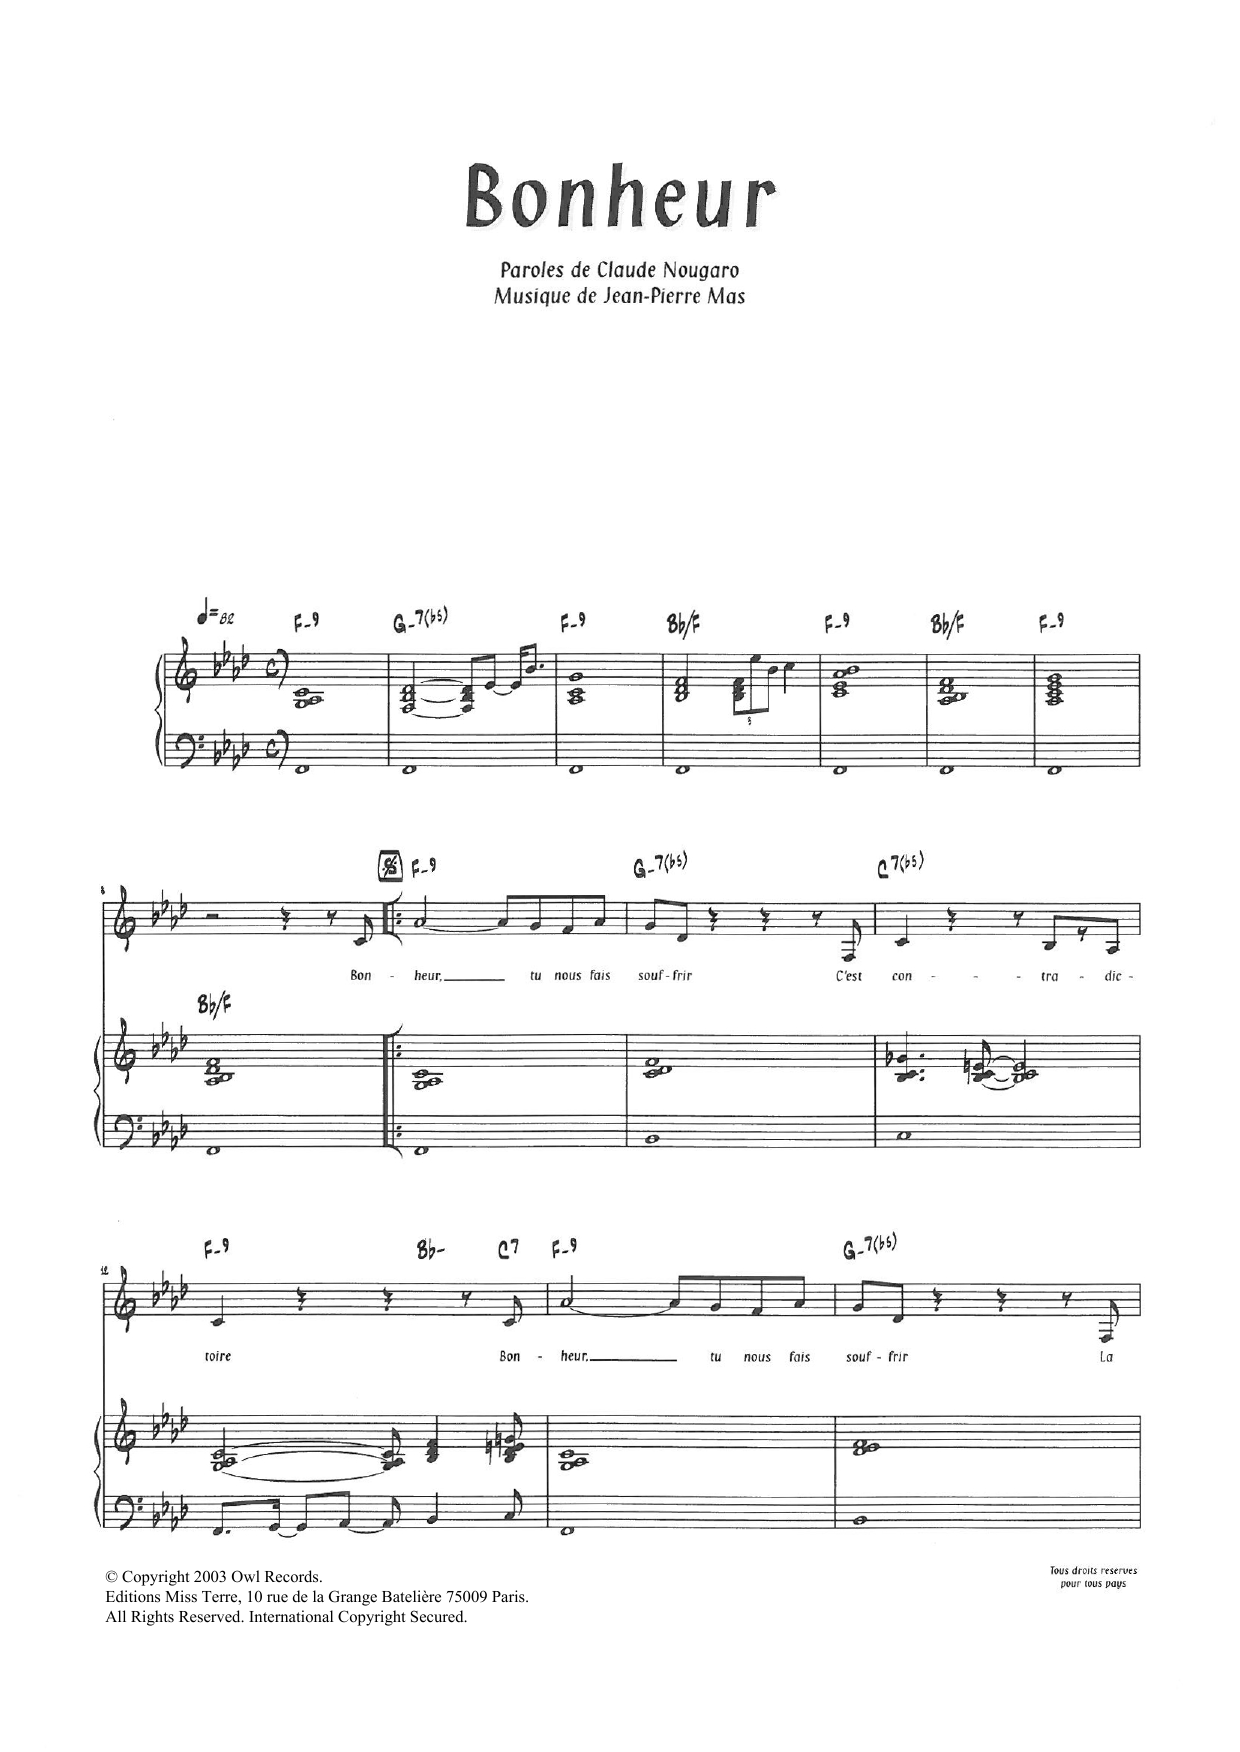 Claude Nougaro Bonheur Sheet Music Notes & Chords for Piano & Vocal - Download or Print PDF